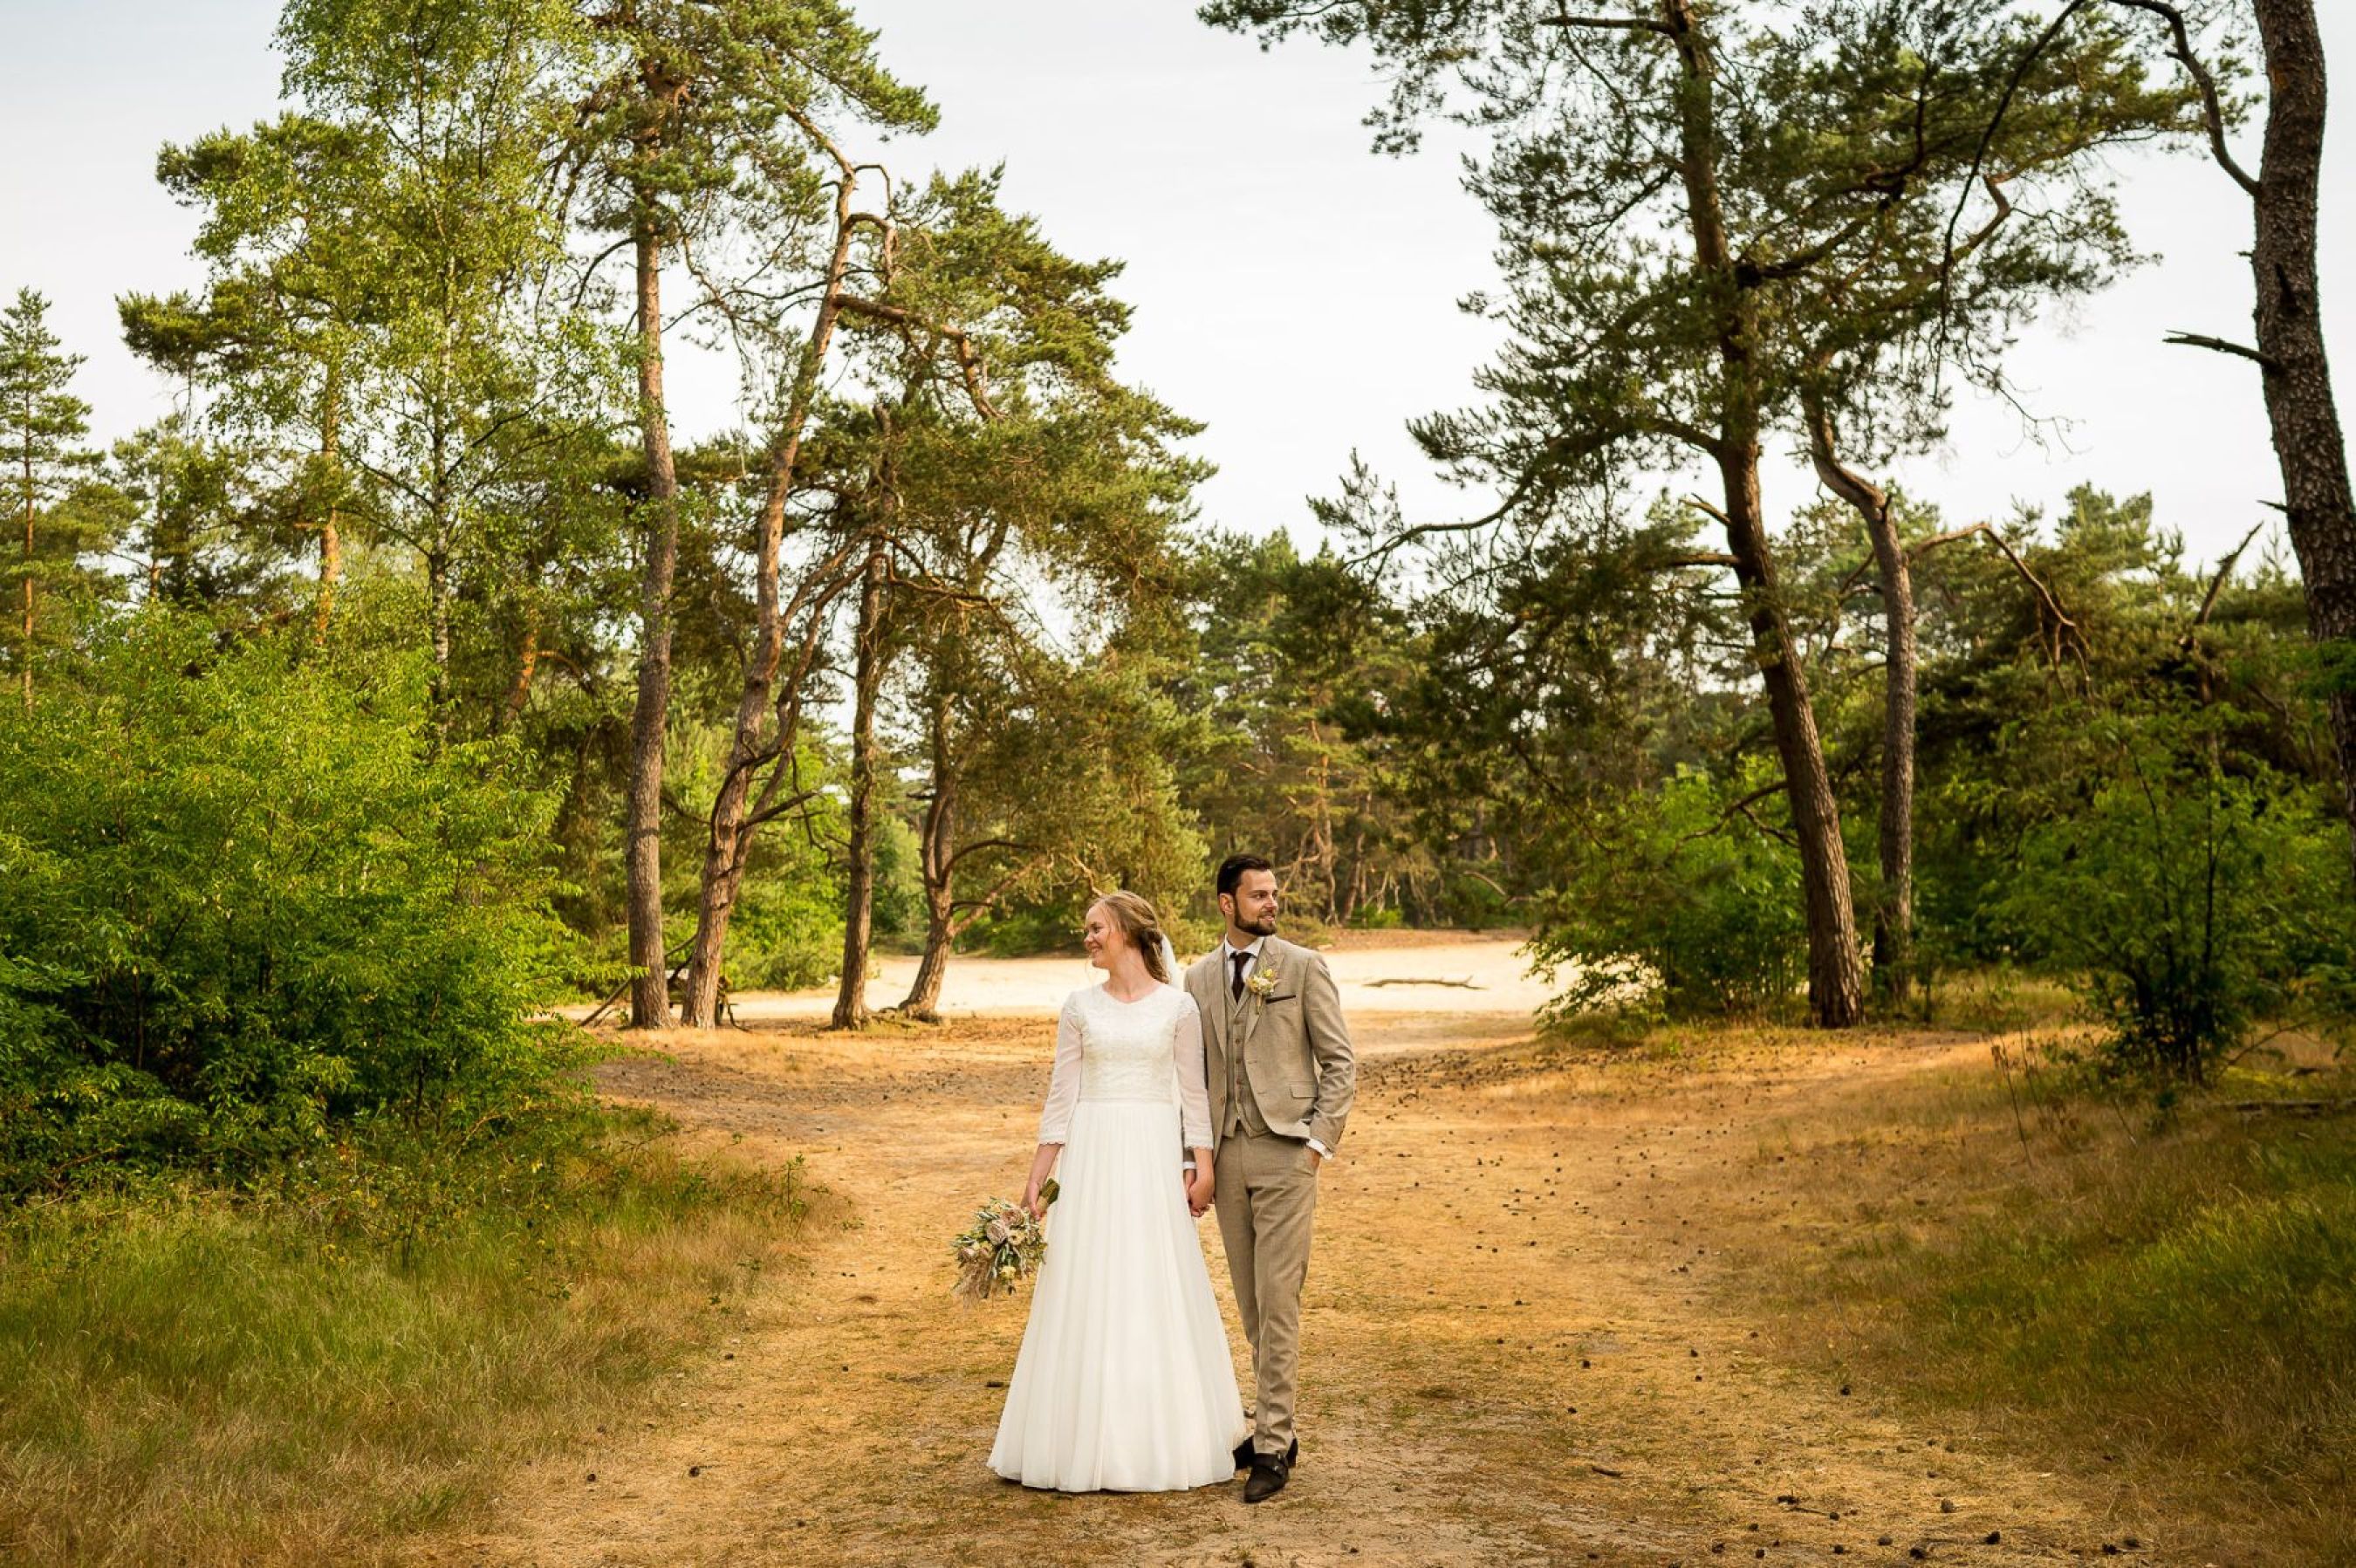 Marinus-Dianne-Jan-van-de-Maat-Bruidsfotografie-Weddings-Bruidsreportage-Trouwfotografie-Leersum